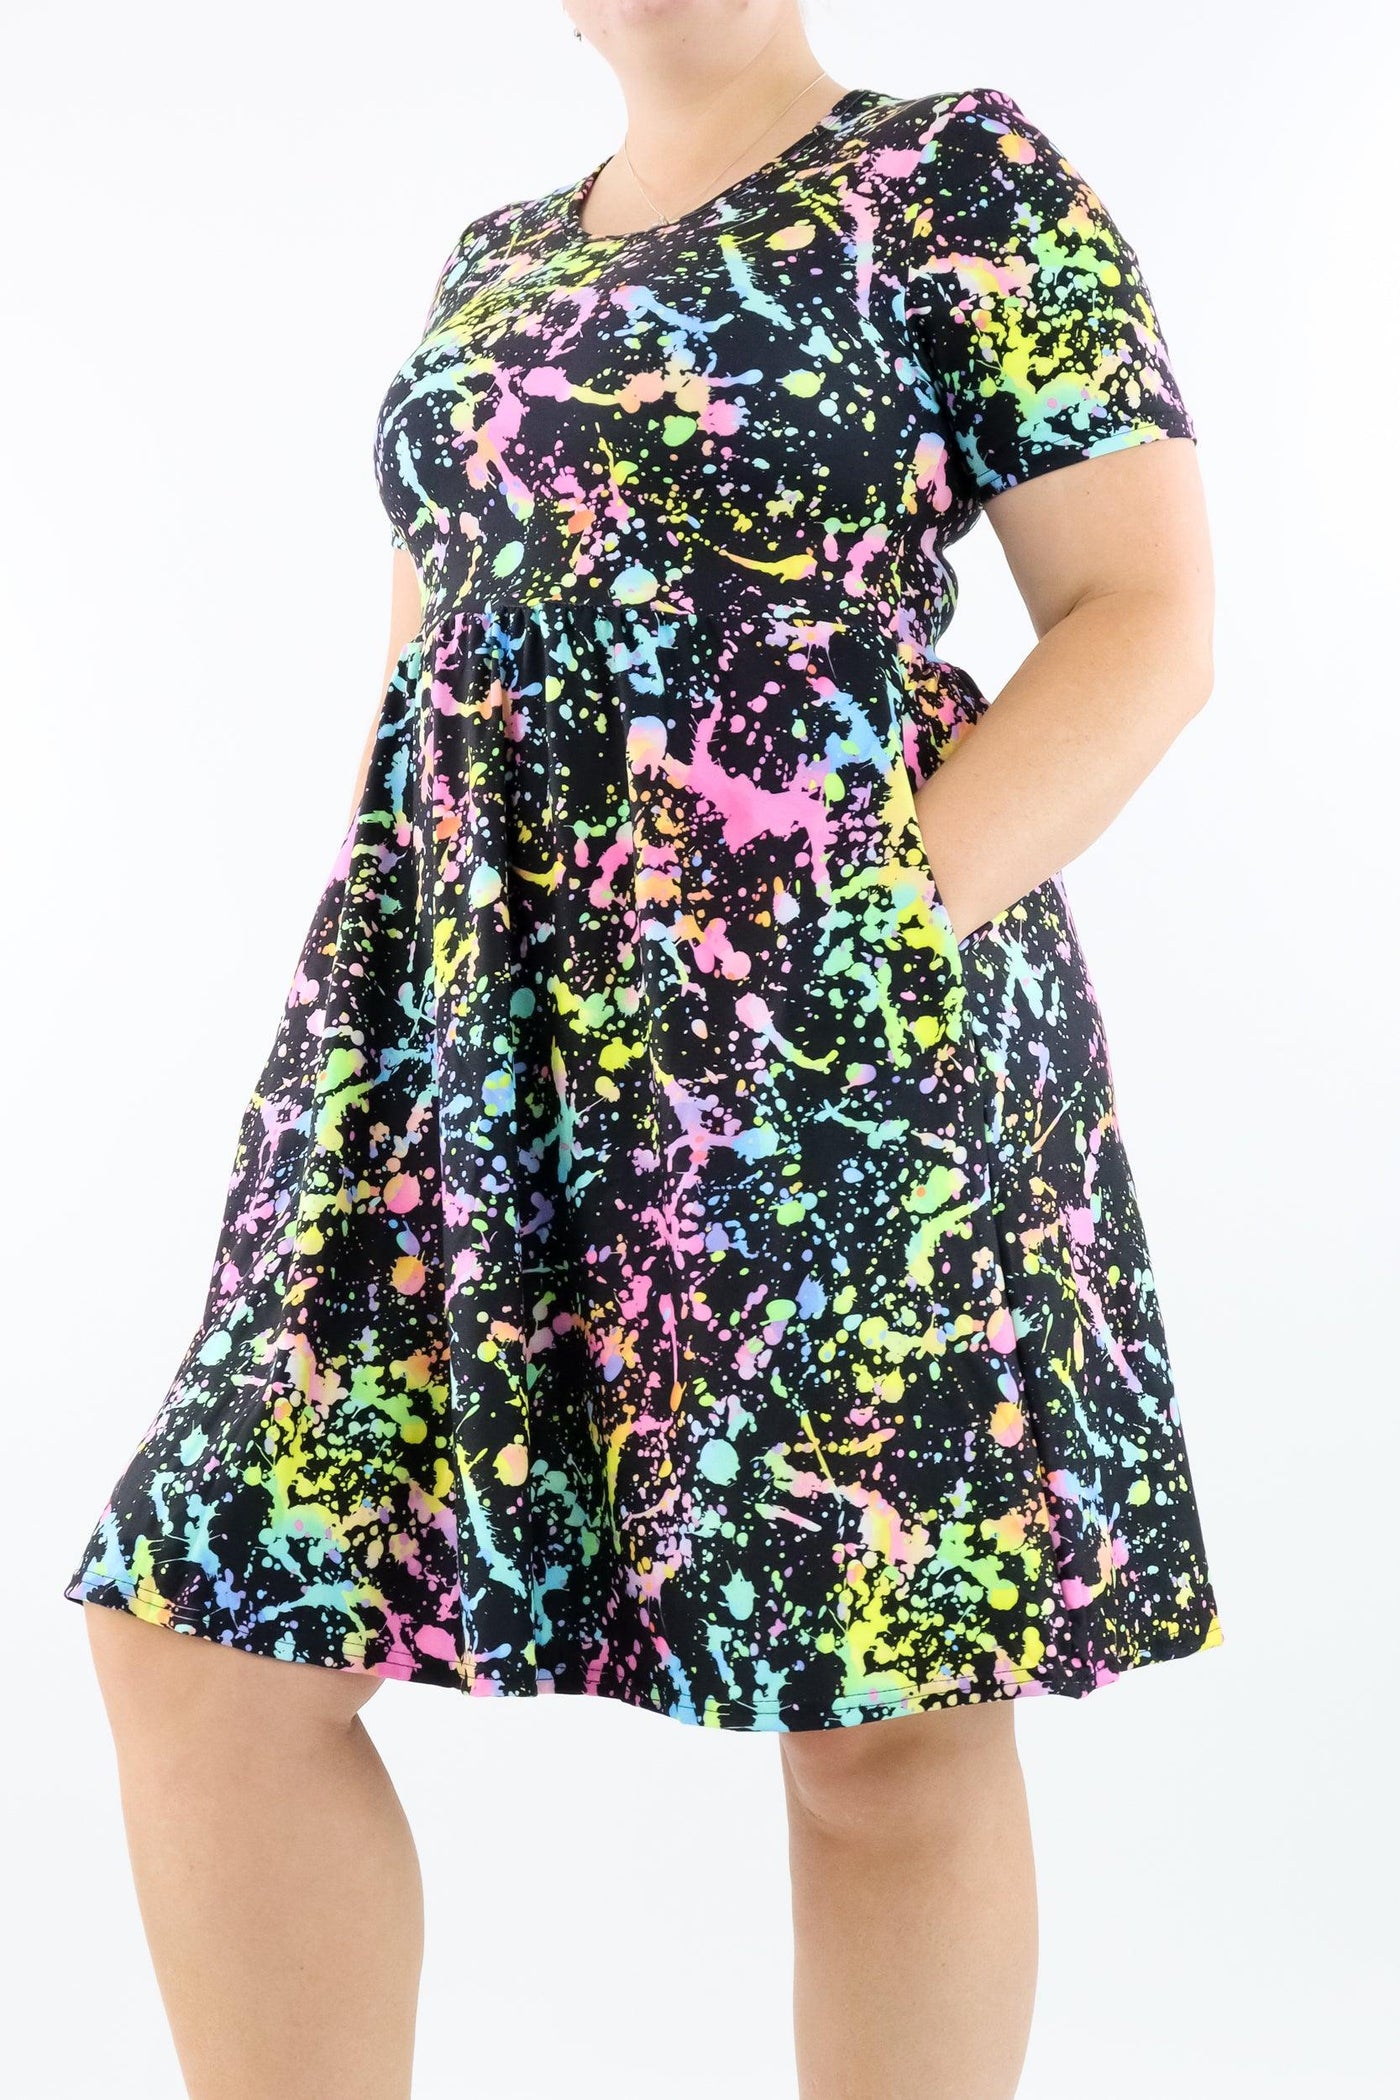 Neon Splash - Short Sleeve Skater Dress - Knee Length - Side Pockets - Pawlie